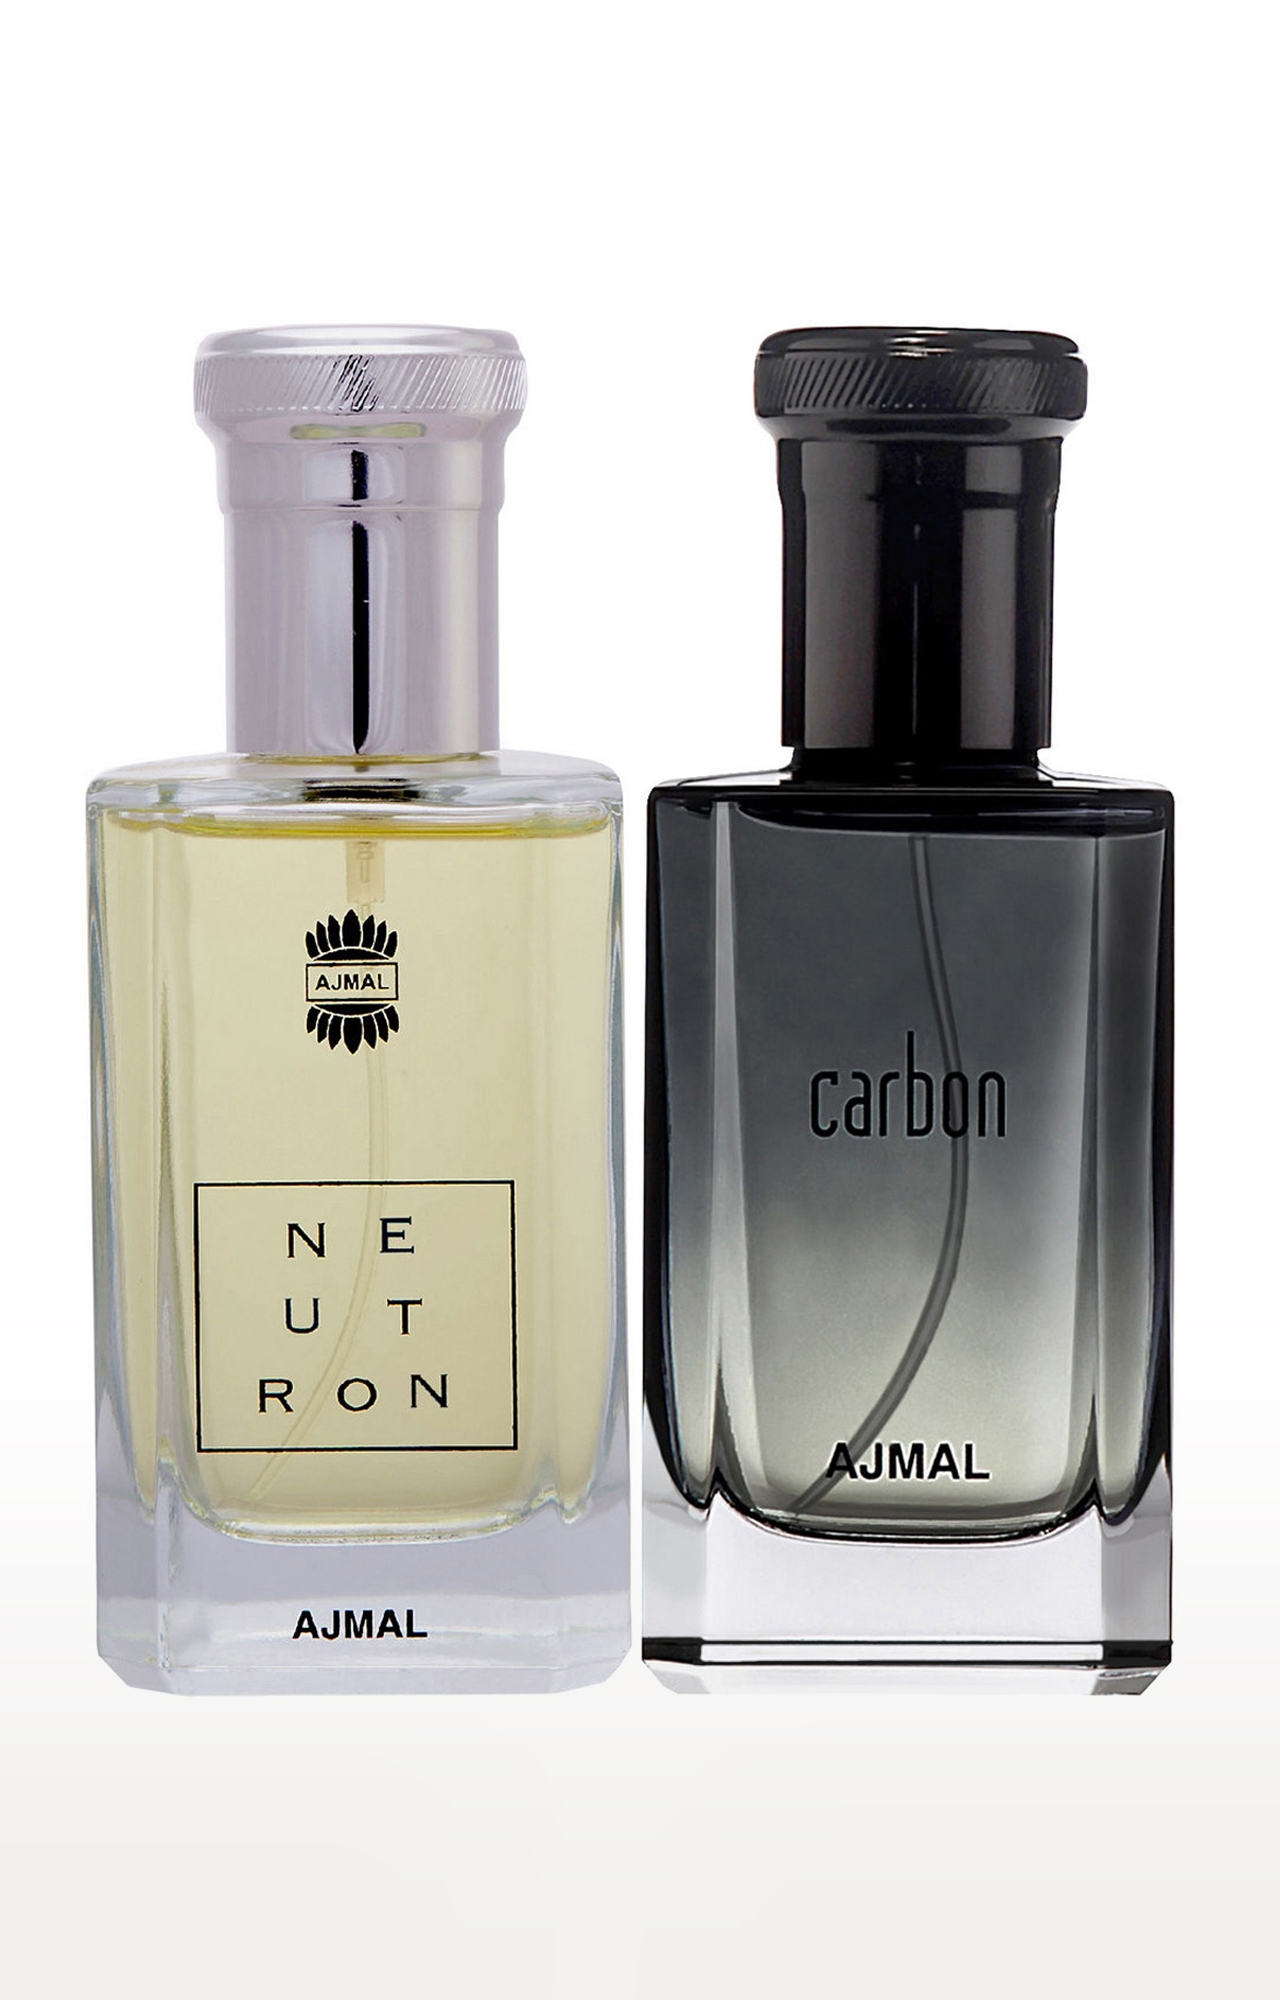 Ajmal Neutron EDP Fruity Perfume 100ml for Men and Carbon EDP Perfume 100ml for Men